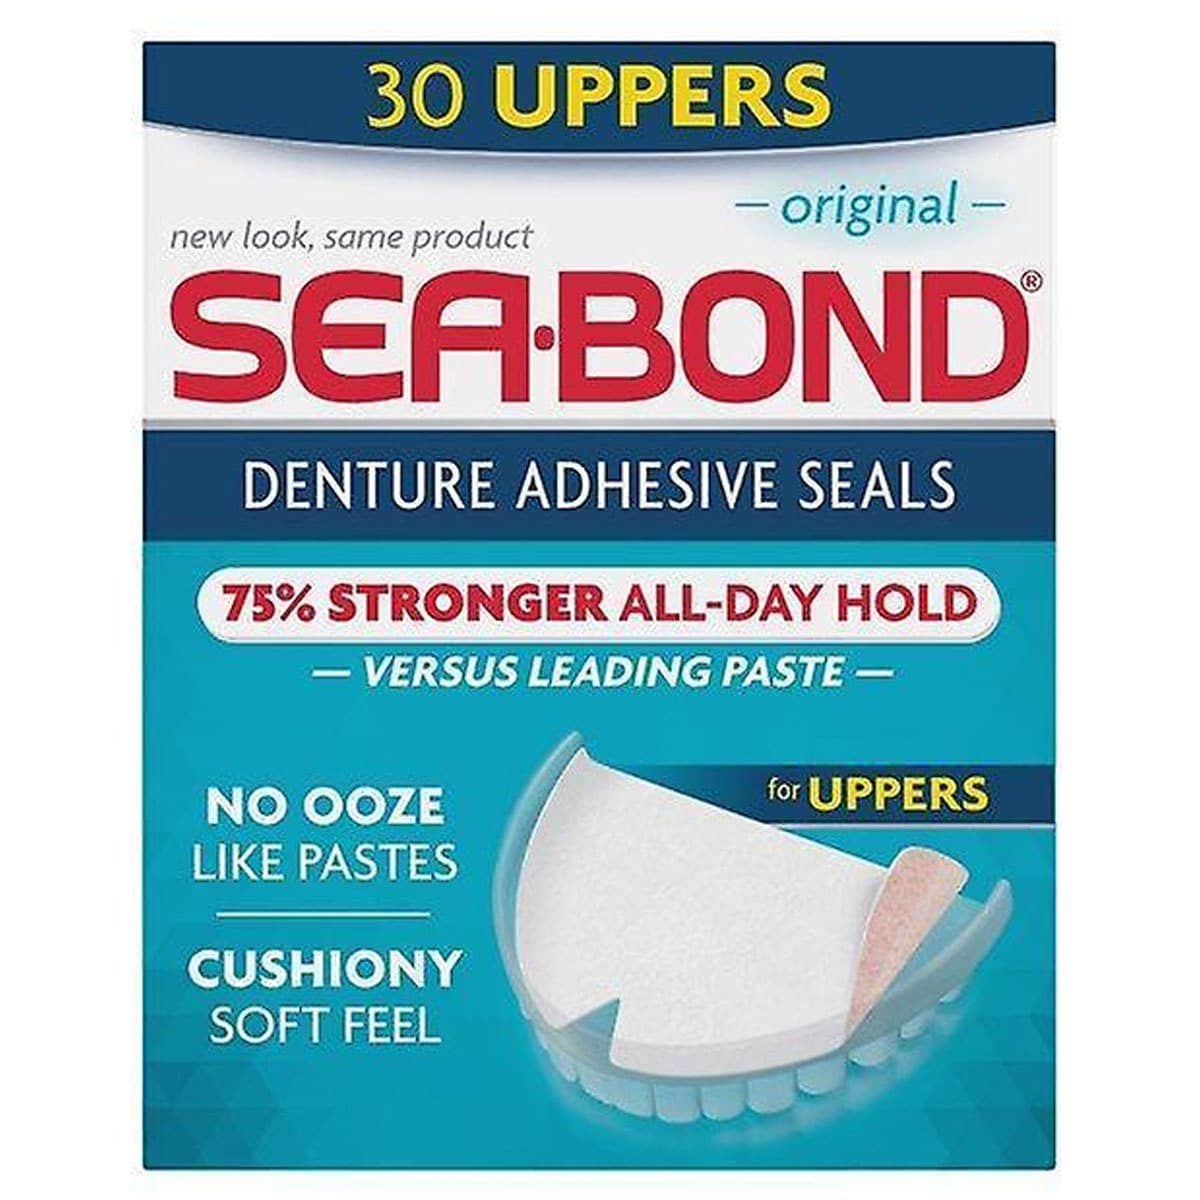 Sea-Bond Original Denture Adhesive Seals Upper 30 Pack